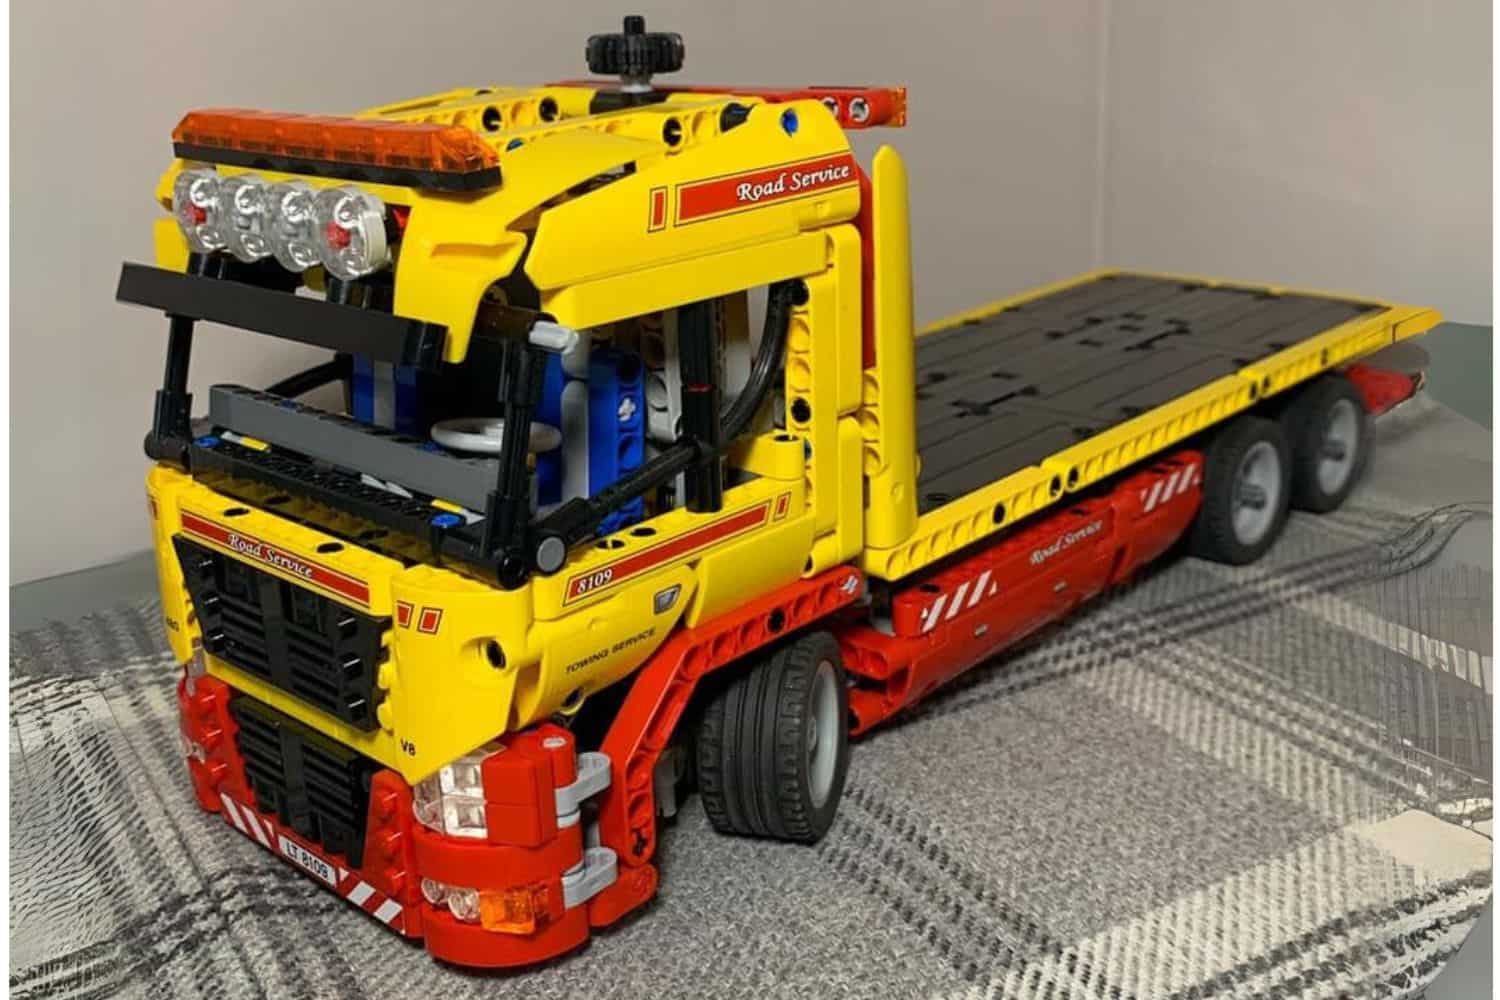 LEGO Technic Flatbed Truck 8109